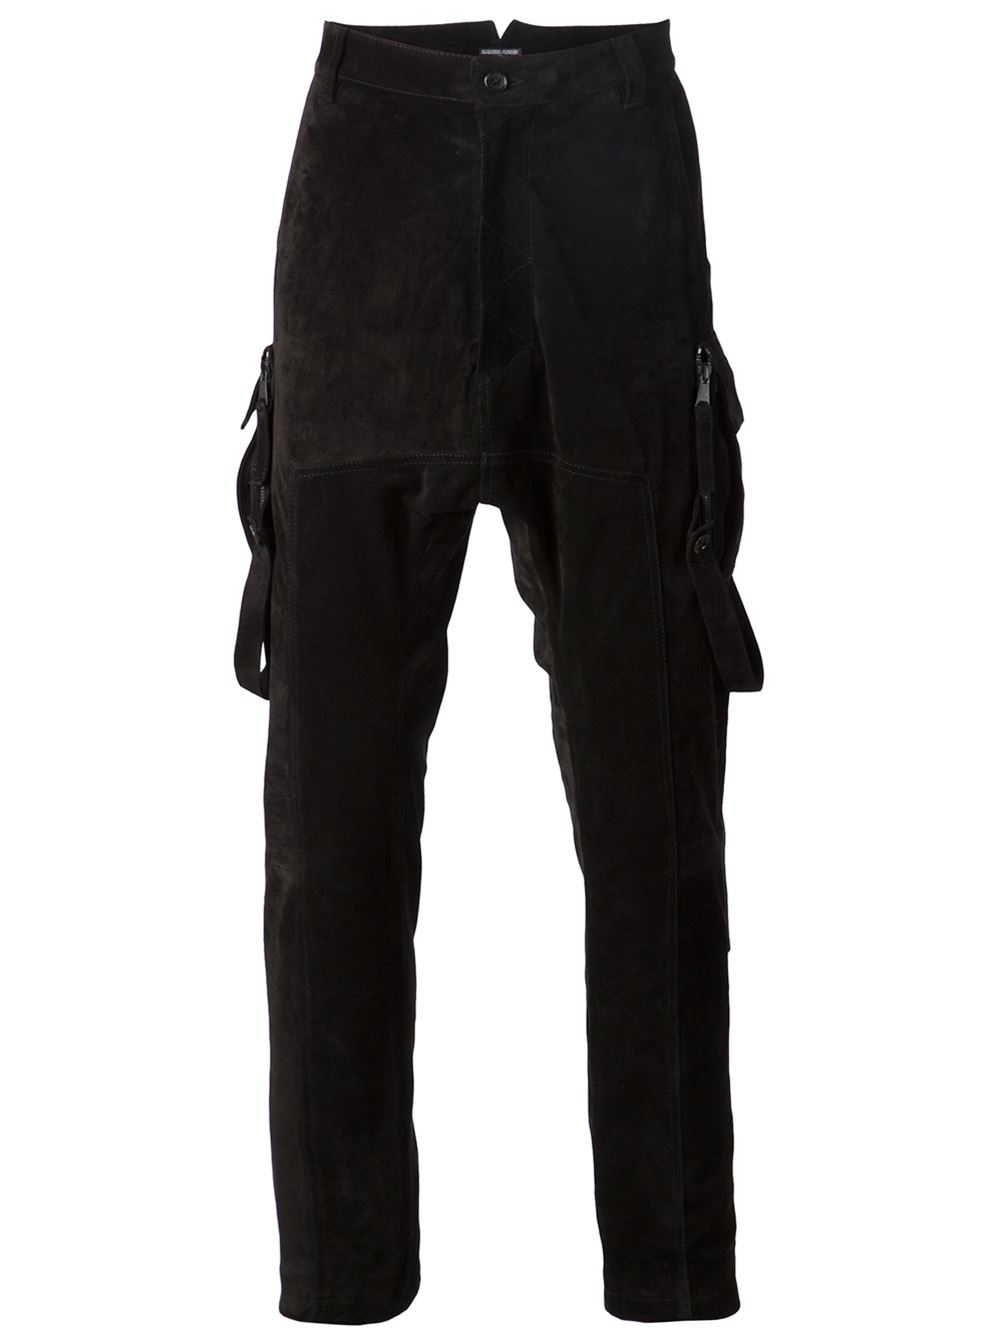 Simon Jersey Classic Men's Flat Front Trouser Unhemmed, Black | Simon Jersey